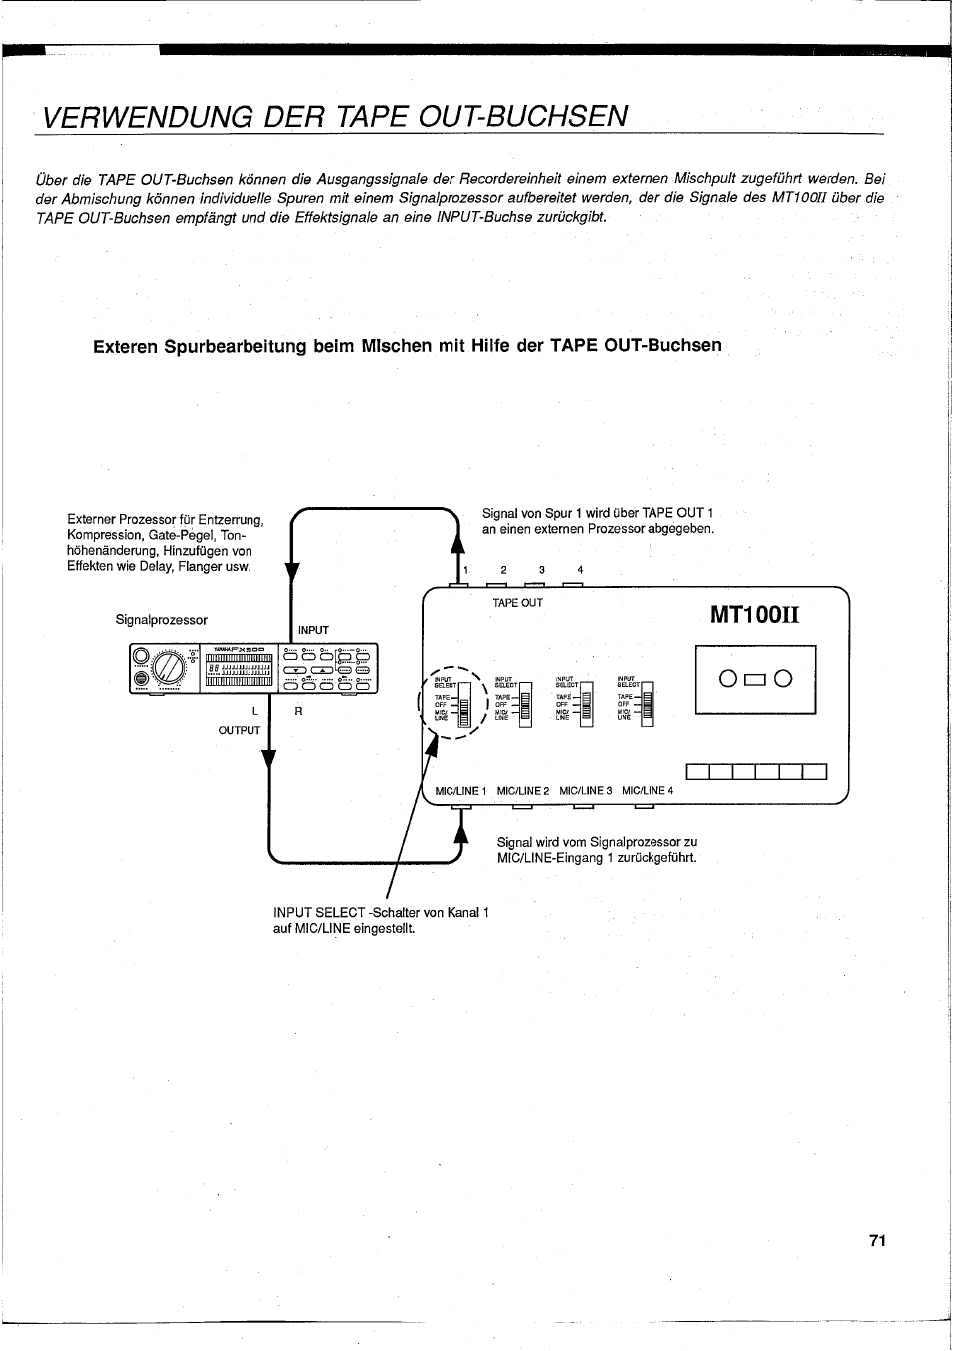 Verwendung der tape out-buchsen | Yamaha MT100II User Manual | Page 71 / 80